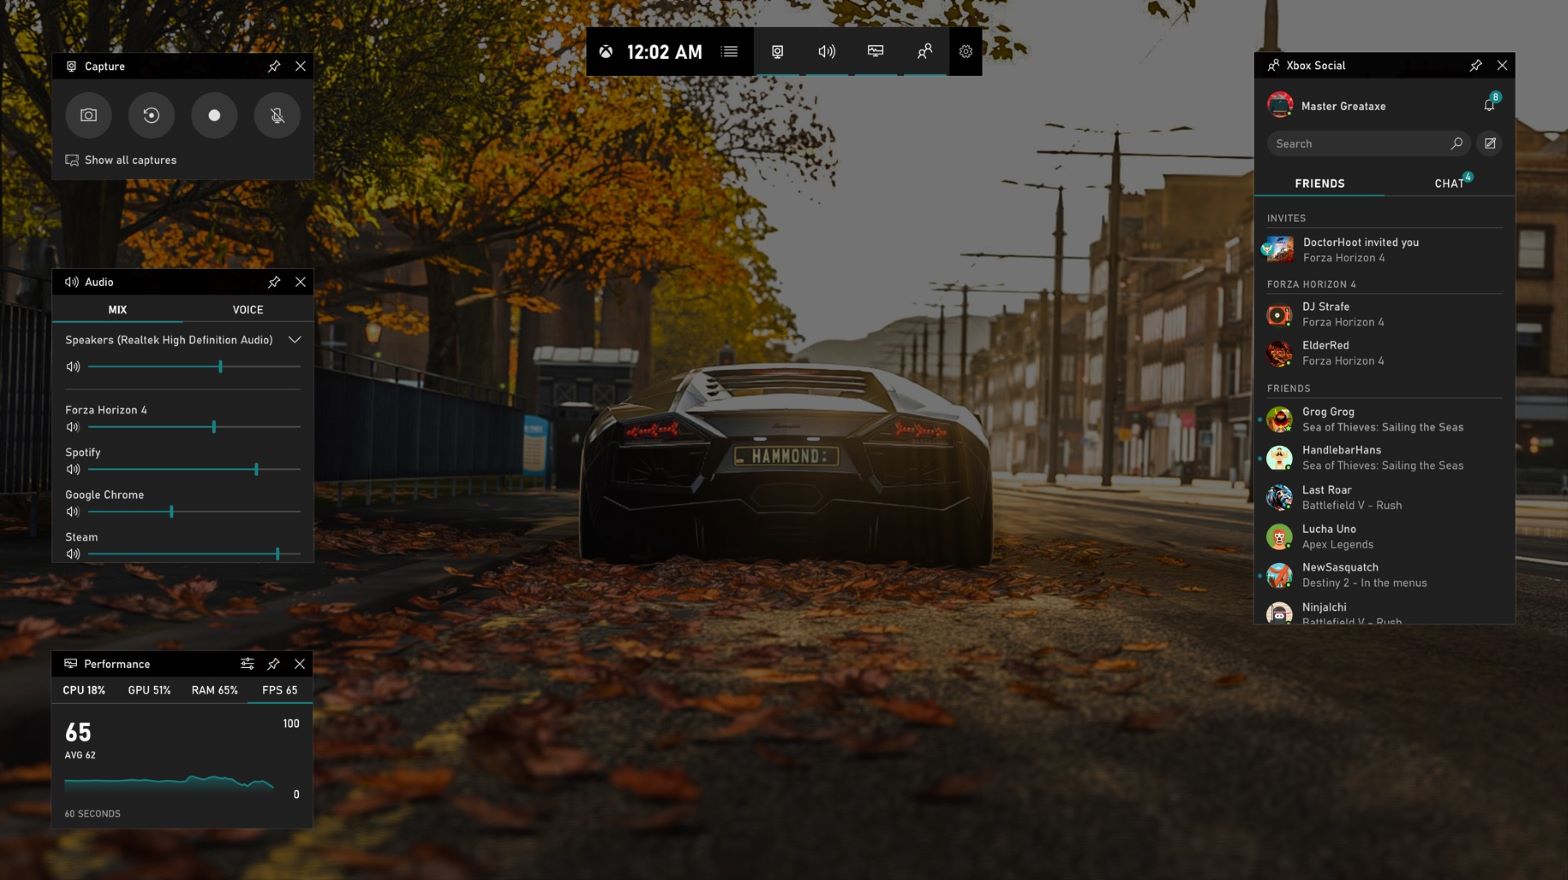 Game Bar overlay over Forza Horizon 4 game image